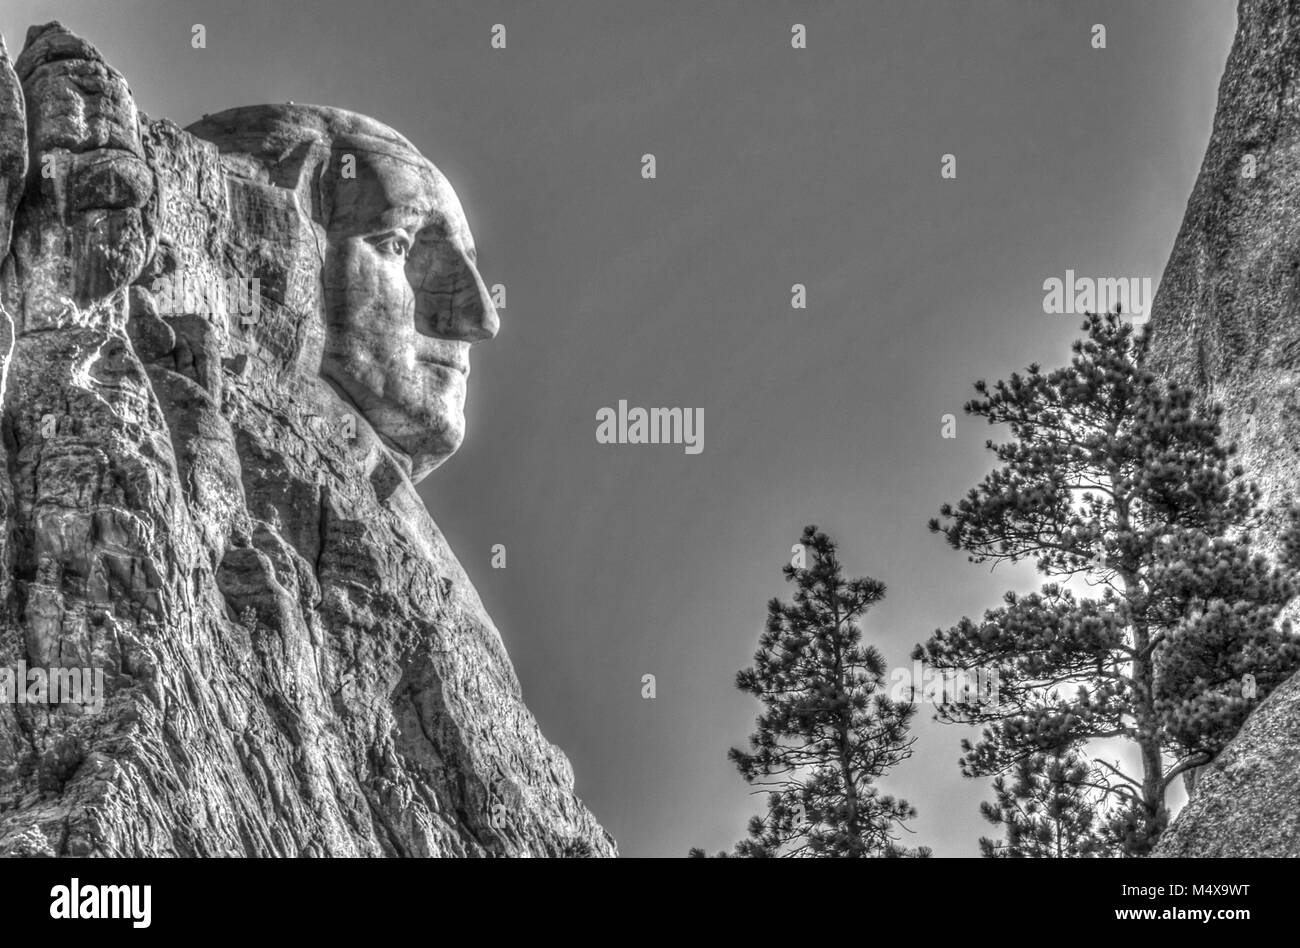 Mount Rushmore near Rapid City in South Dakota Stock Photo